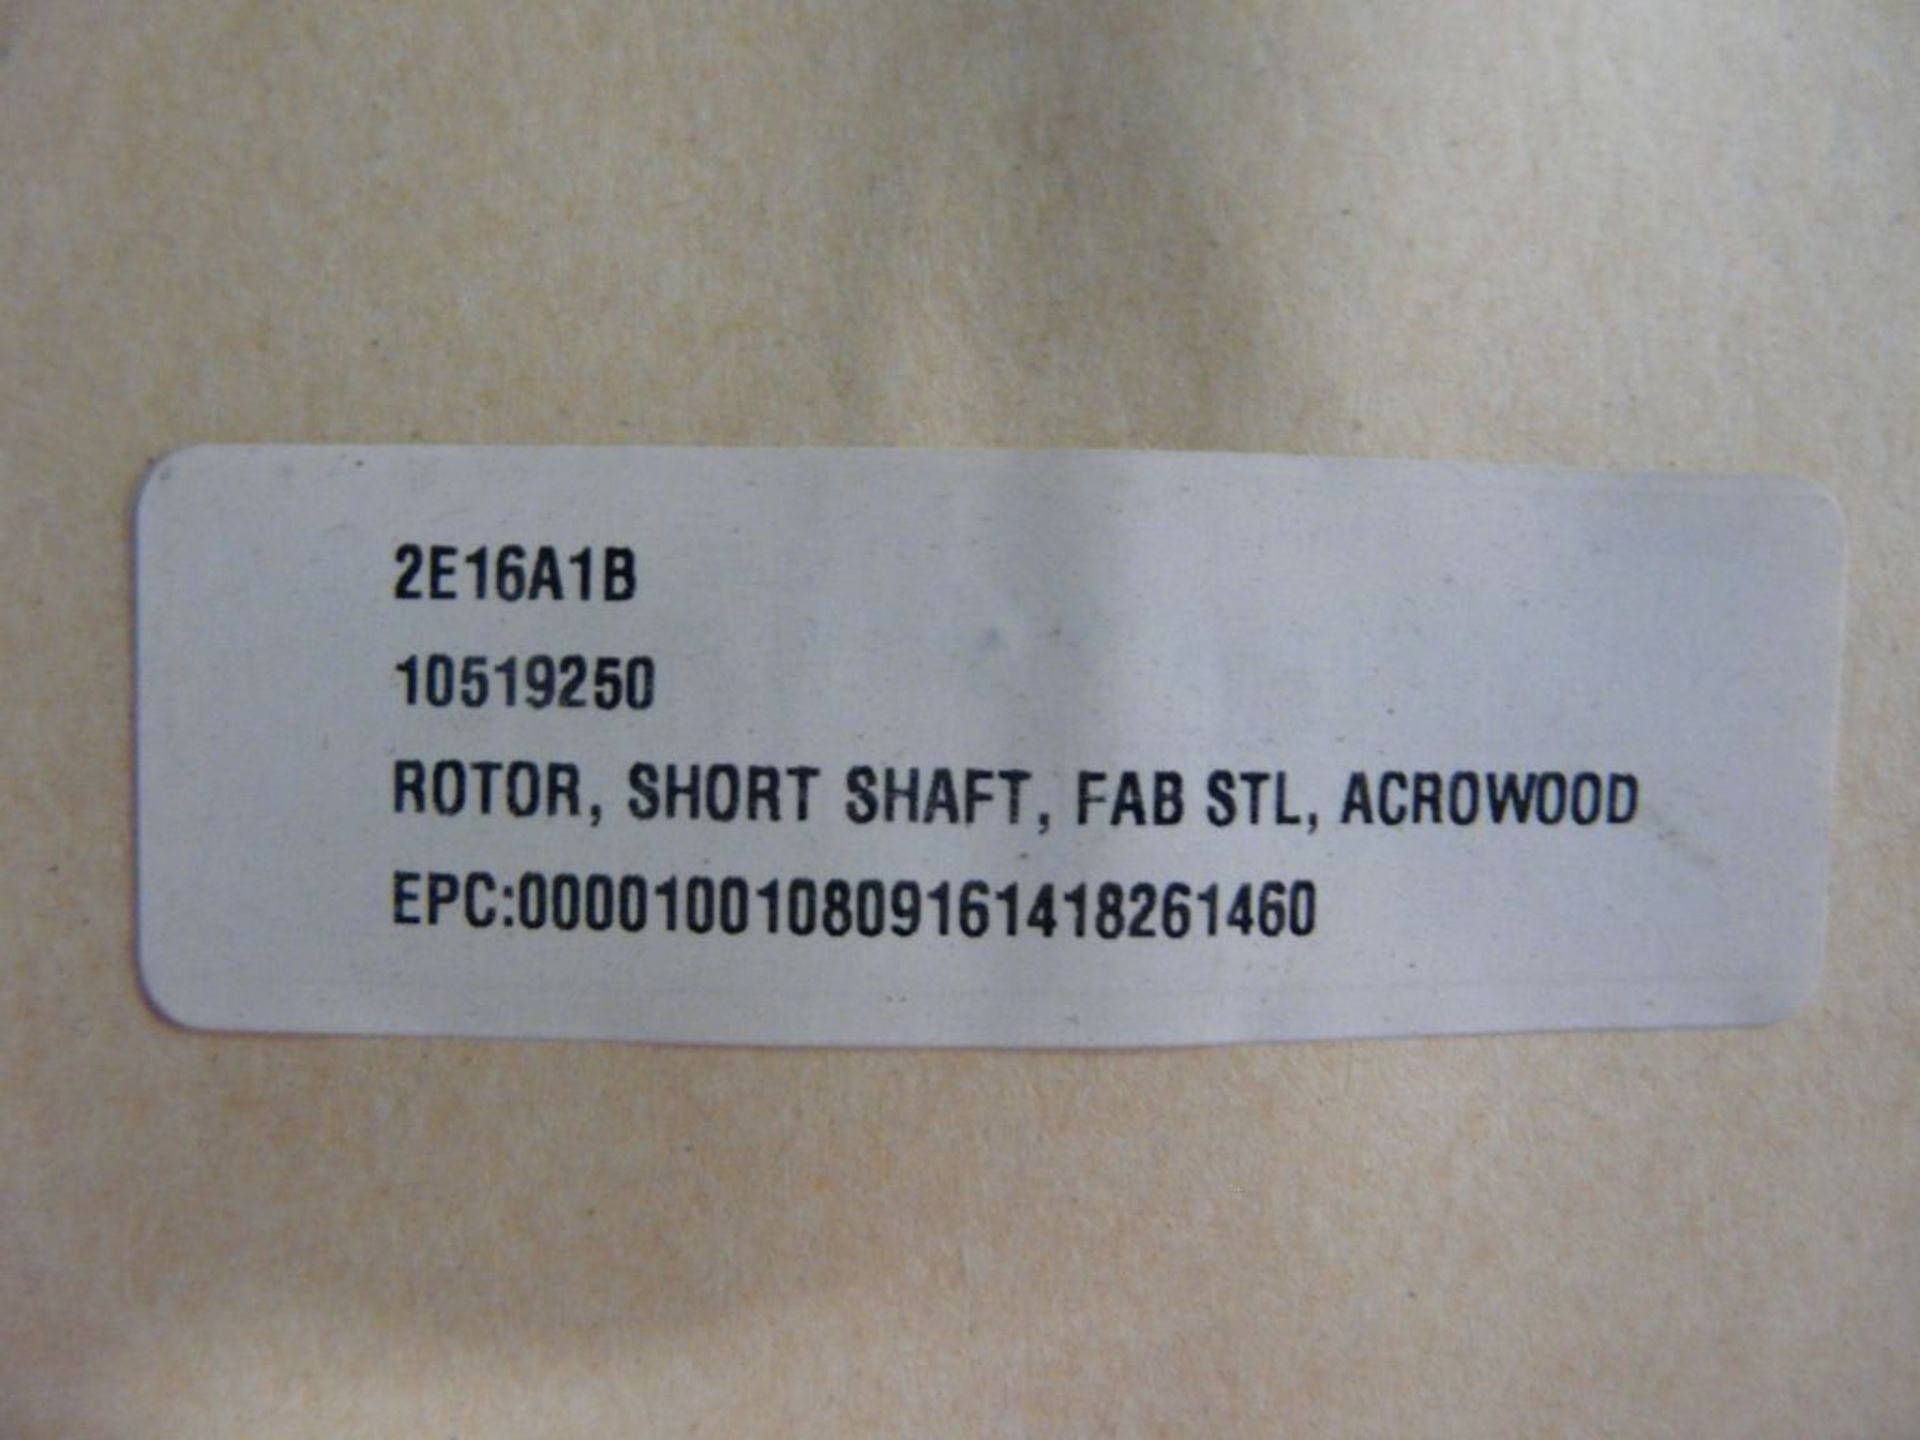 Acrowood FAB STL Short Shaft Rotor - Tag: 215769 - Image 4 of 4